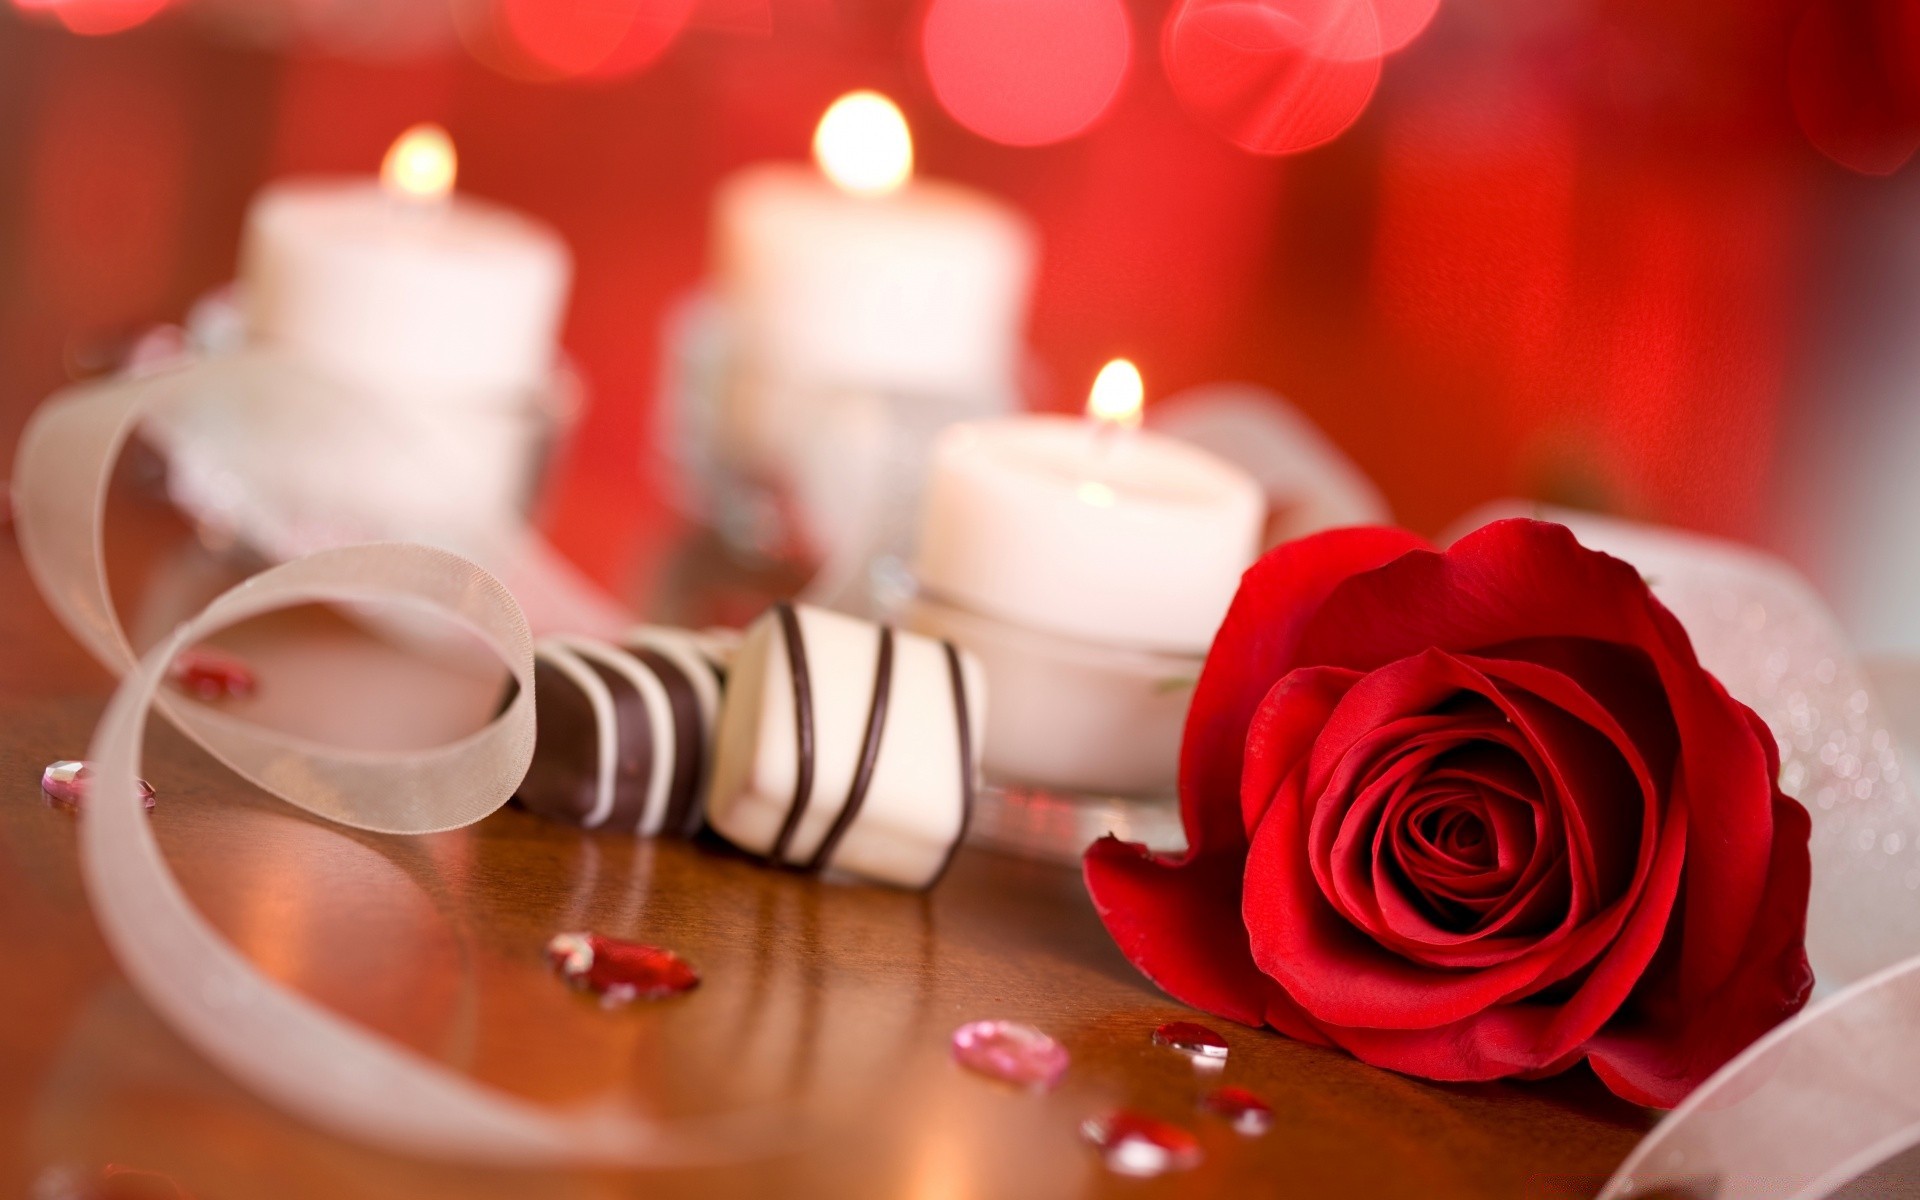 hearts rose wedding romance love flower romantic candle christmas celebration gift